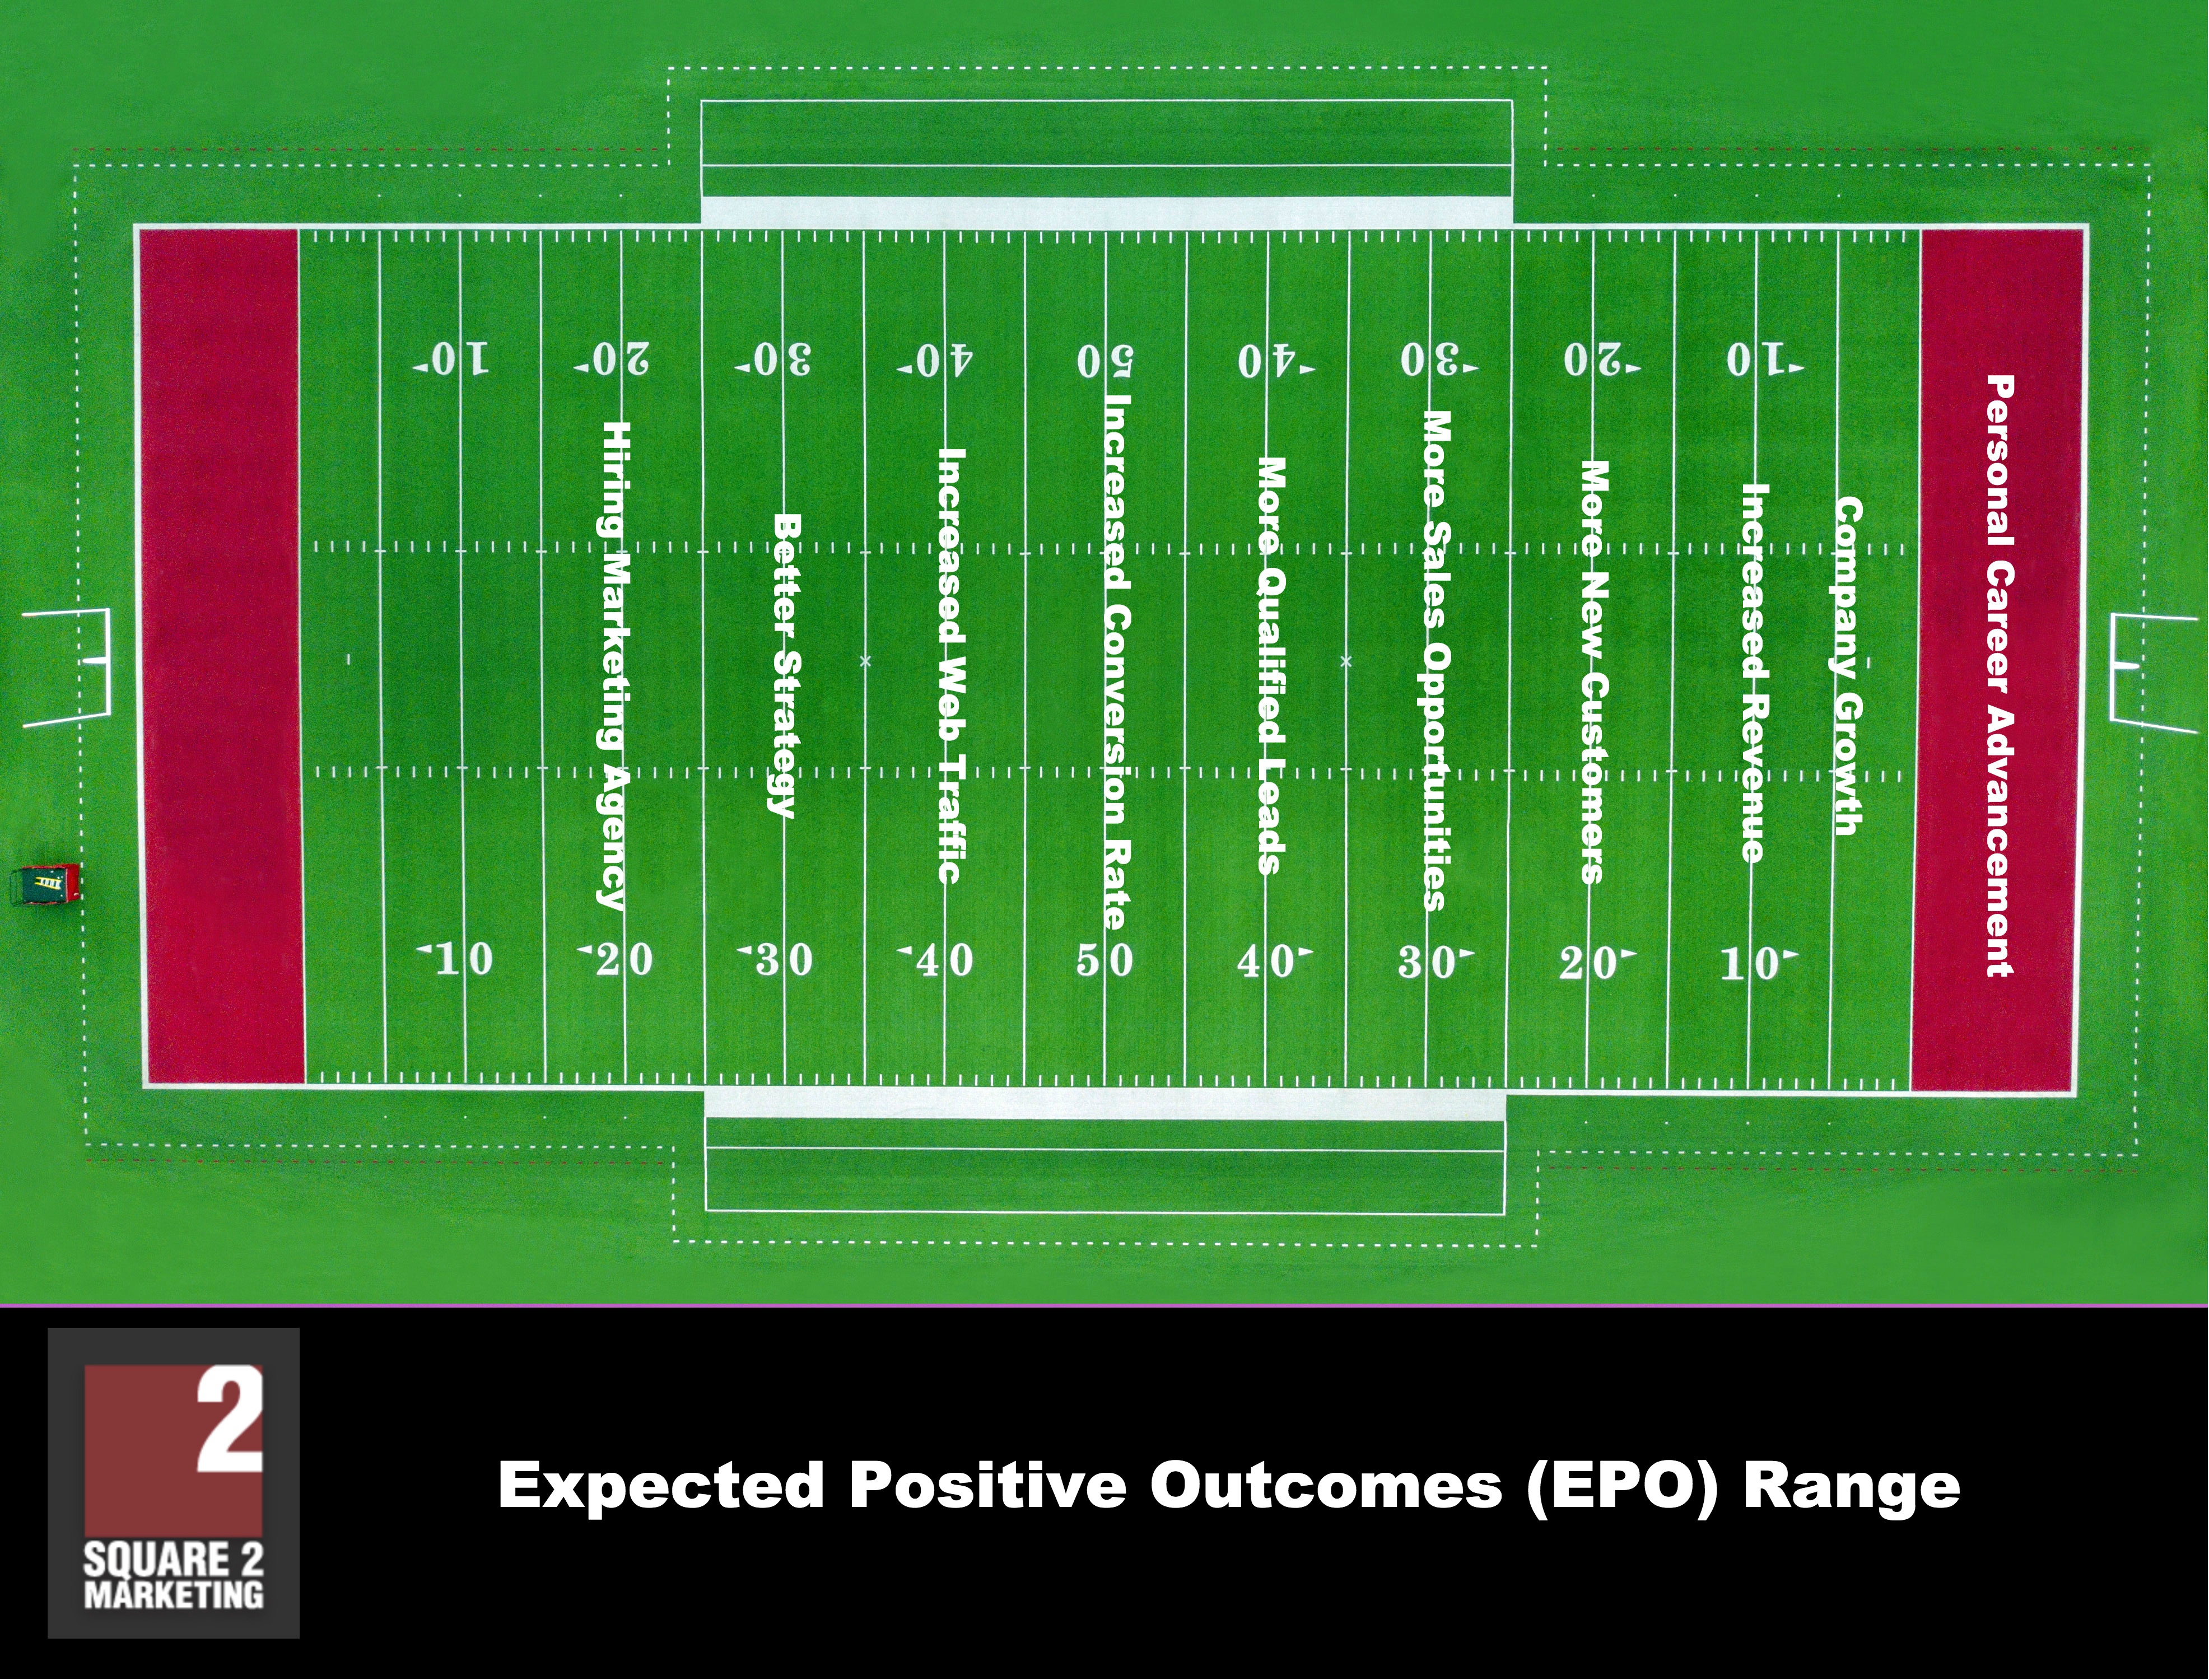 Expected-Positive-Outcomes-EPO-Range-Square-2-Marketing